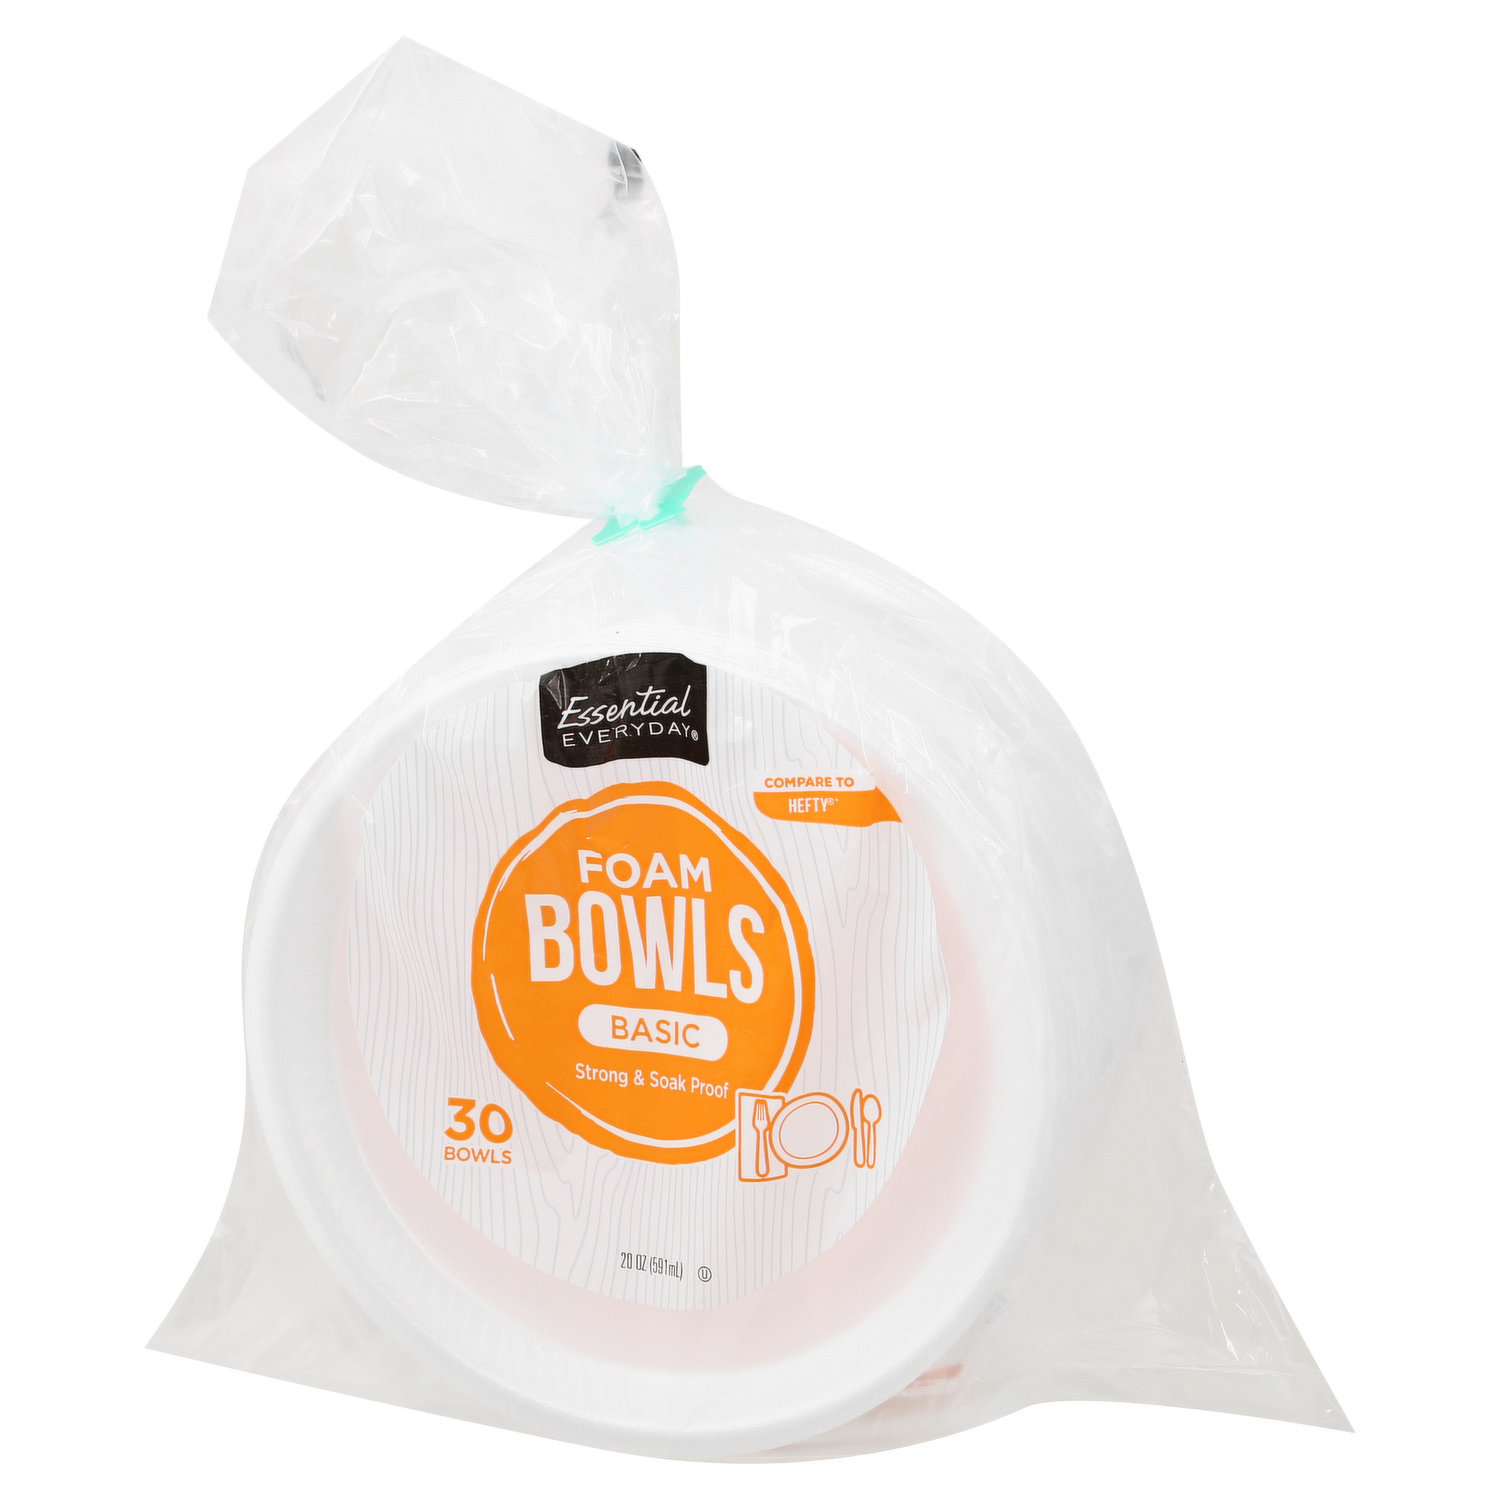  Basic Bowls